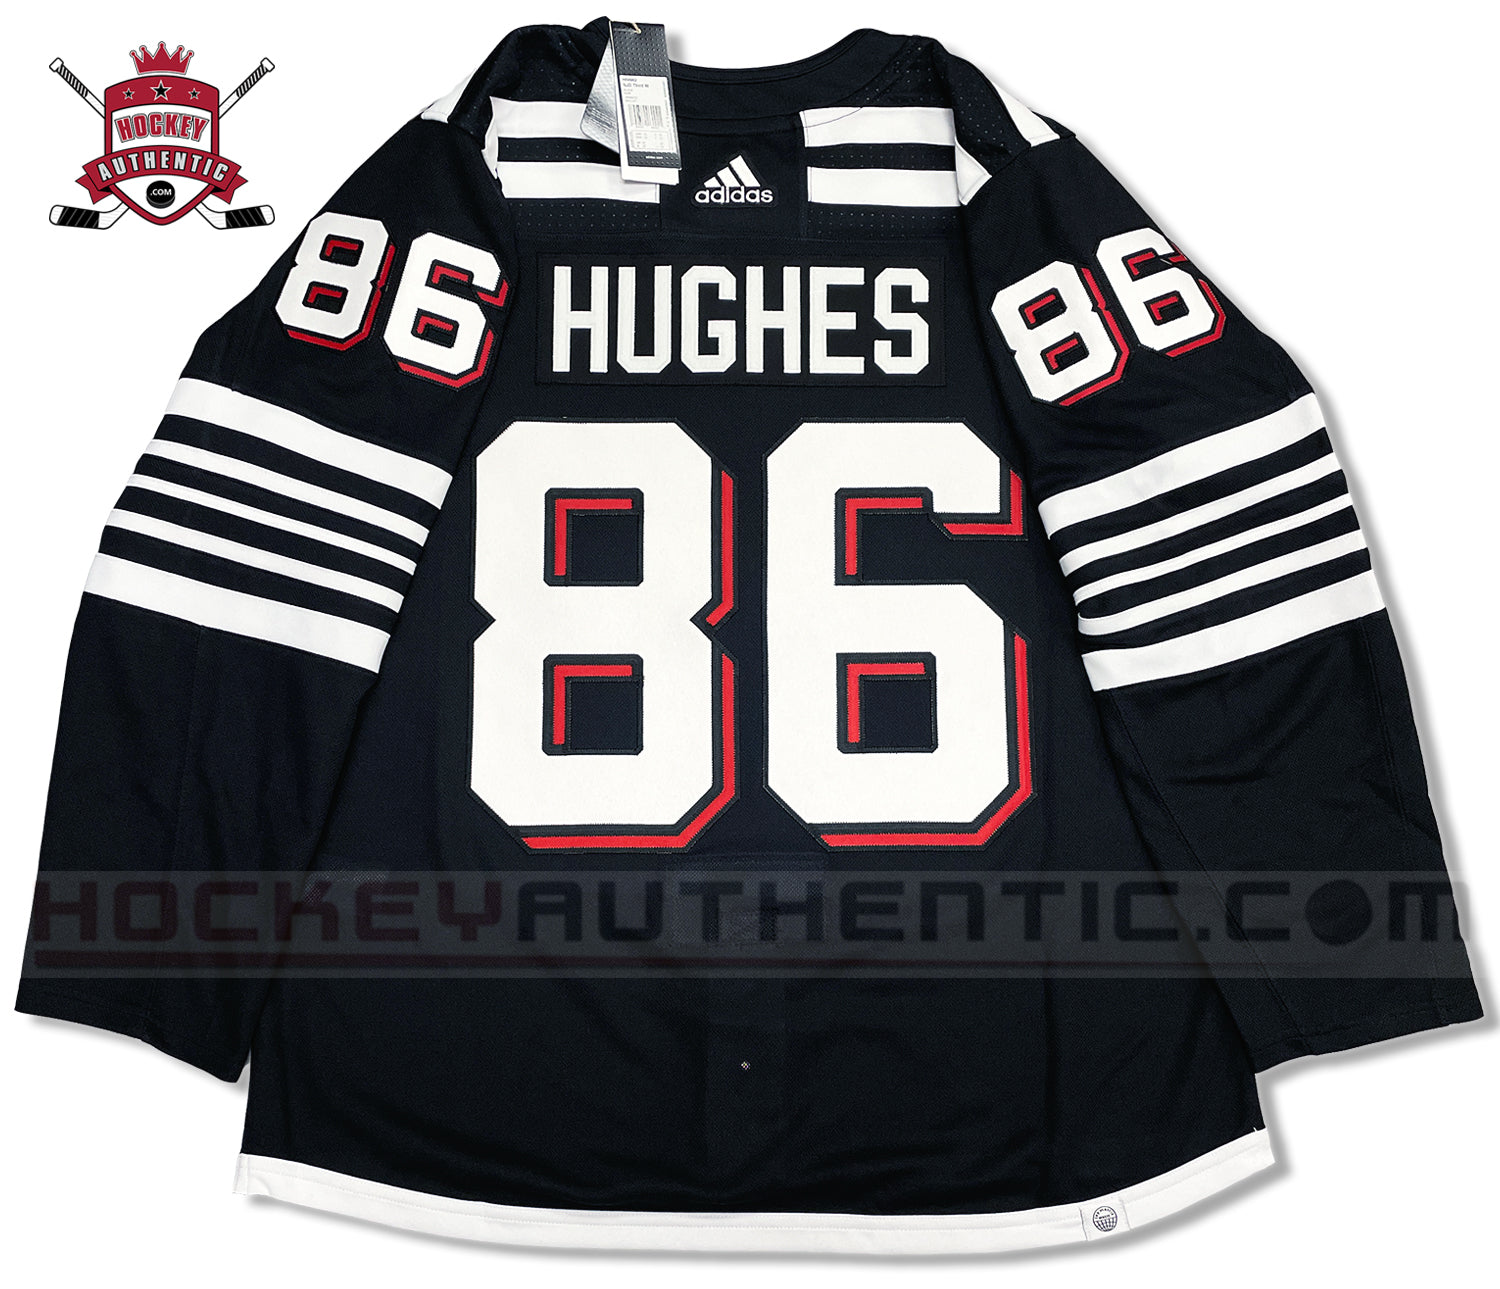 Adidas Chicago Blackhawks Winter Classic Alternate Pro Jersey Size 50 52 56  60